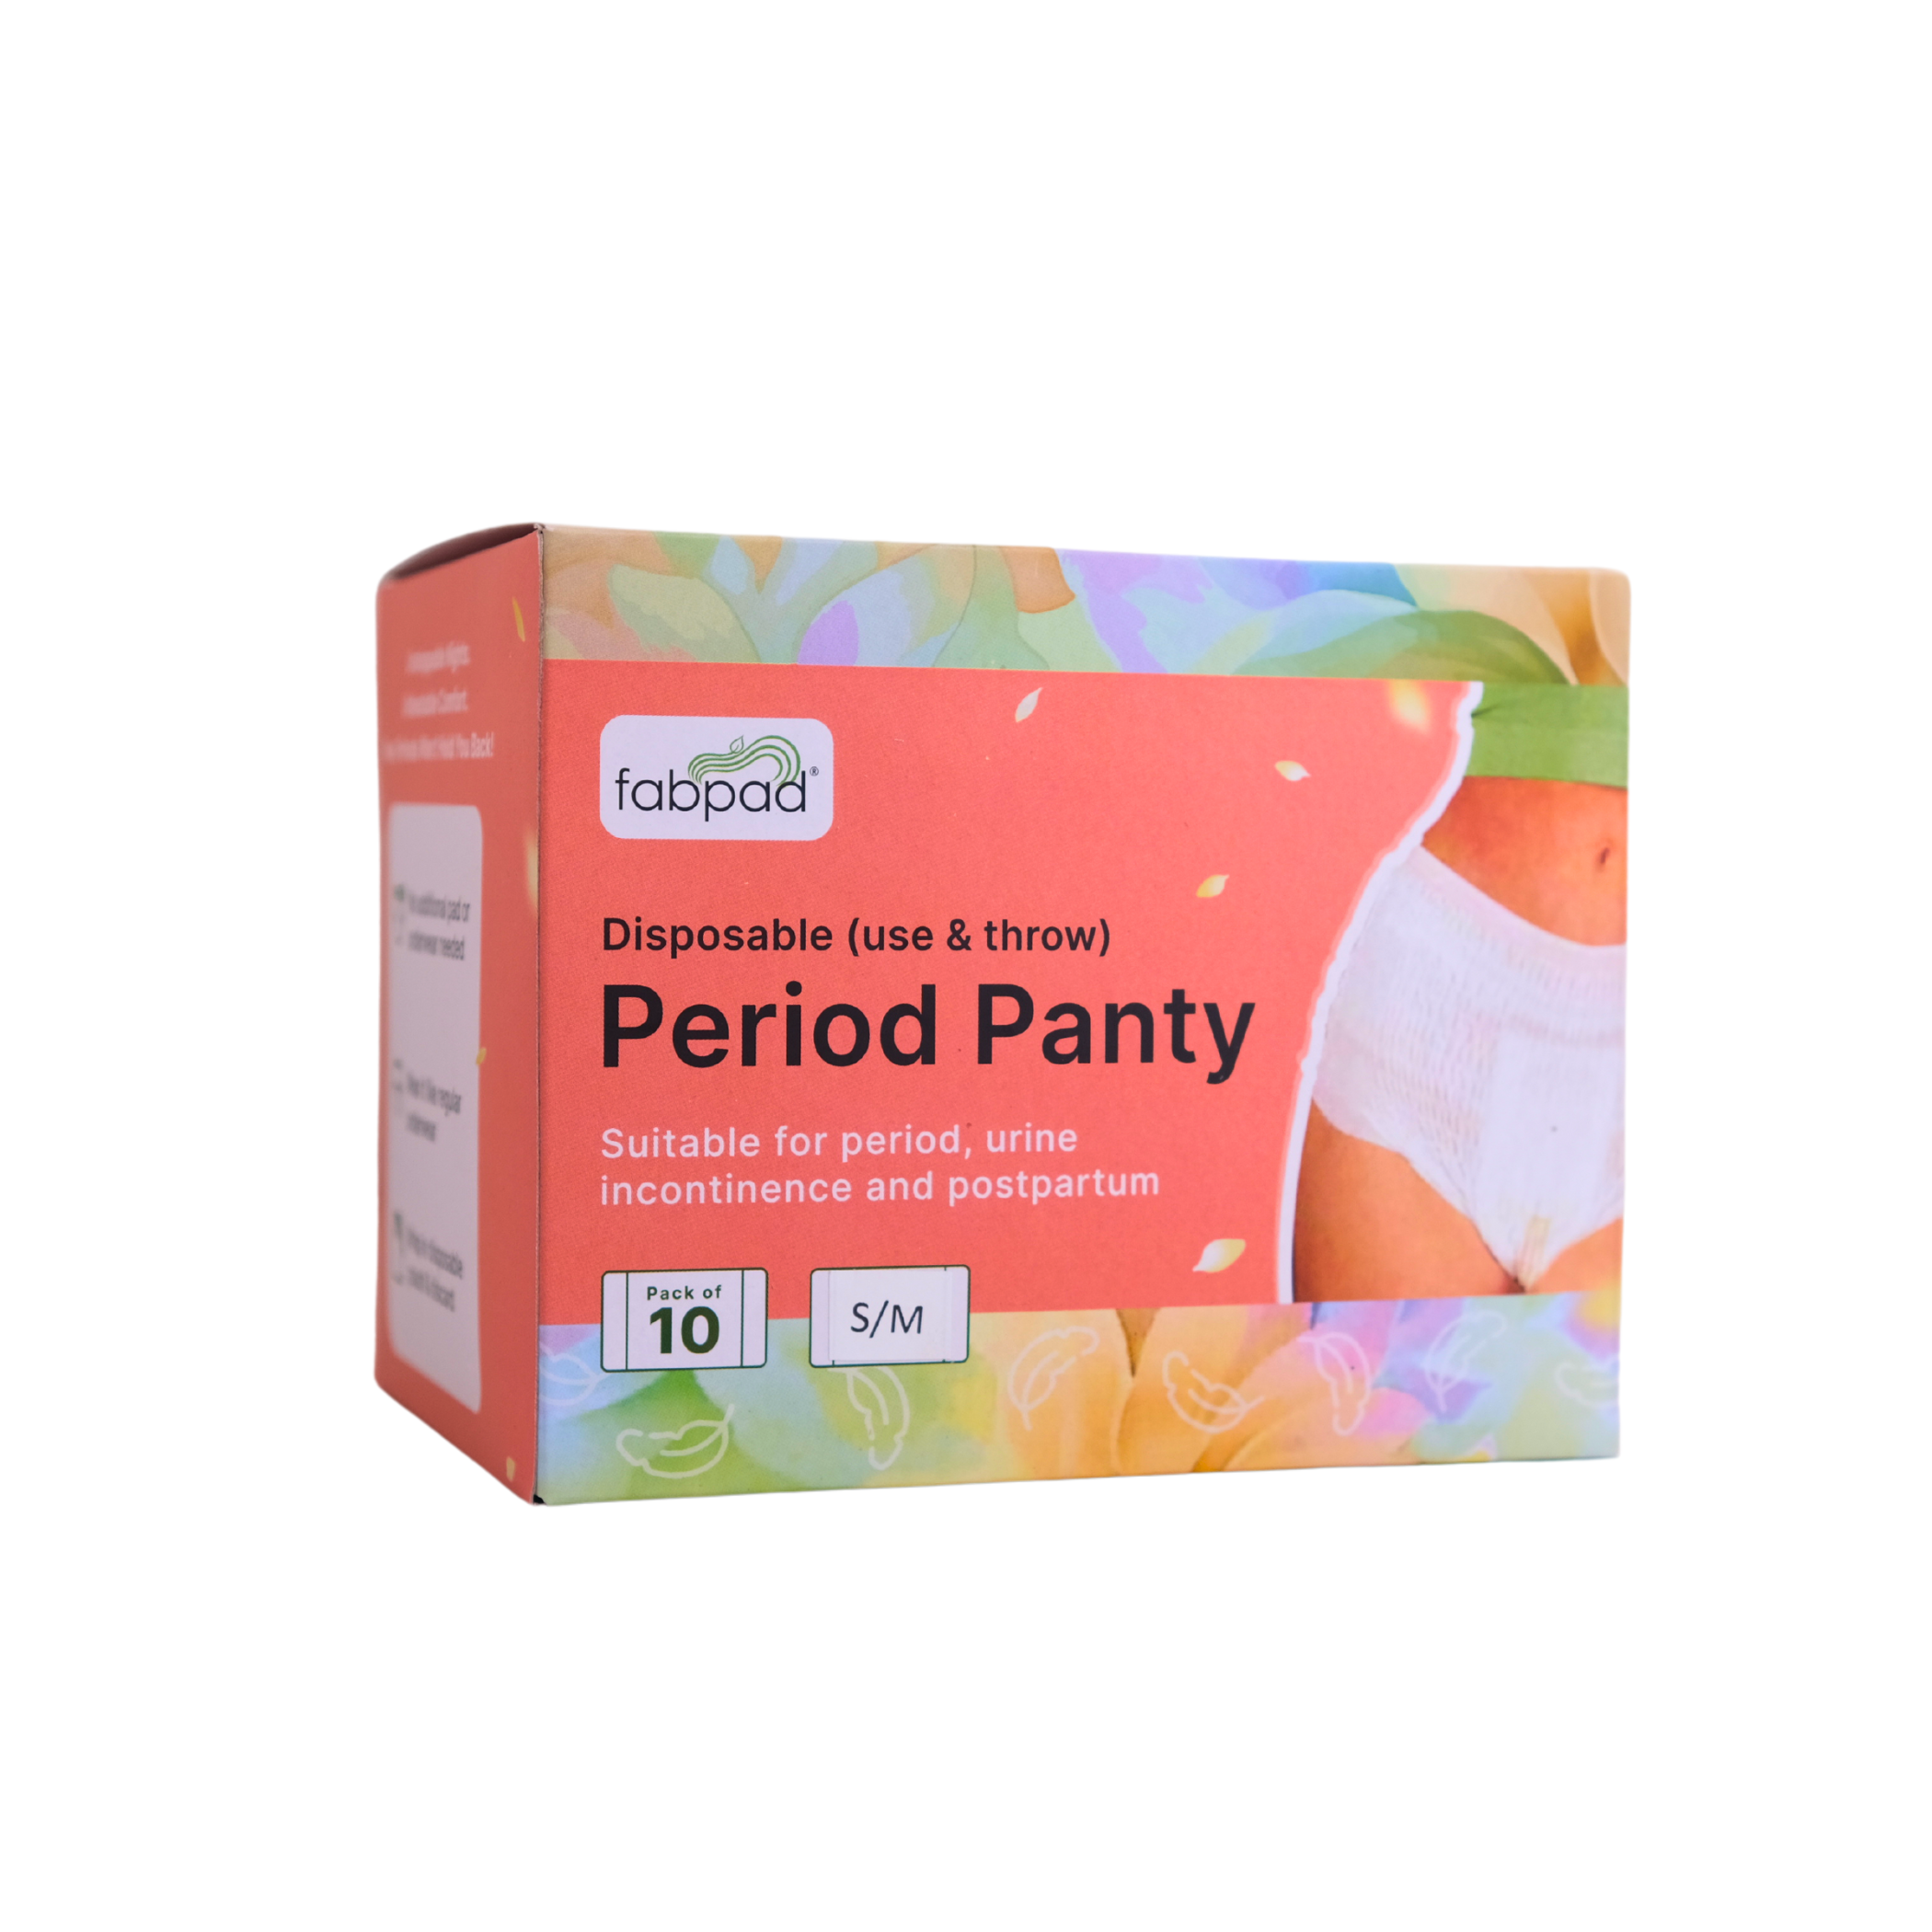 Fabpad Ultra Absorbent Disposable (Use & Throw) Period Panties - Pack